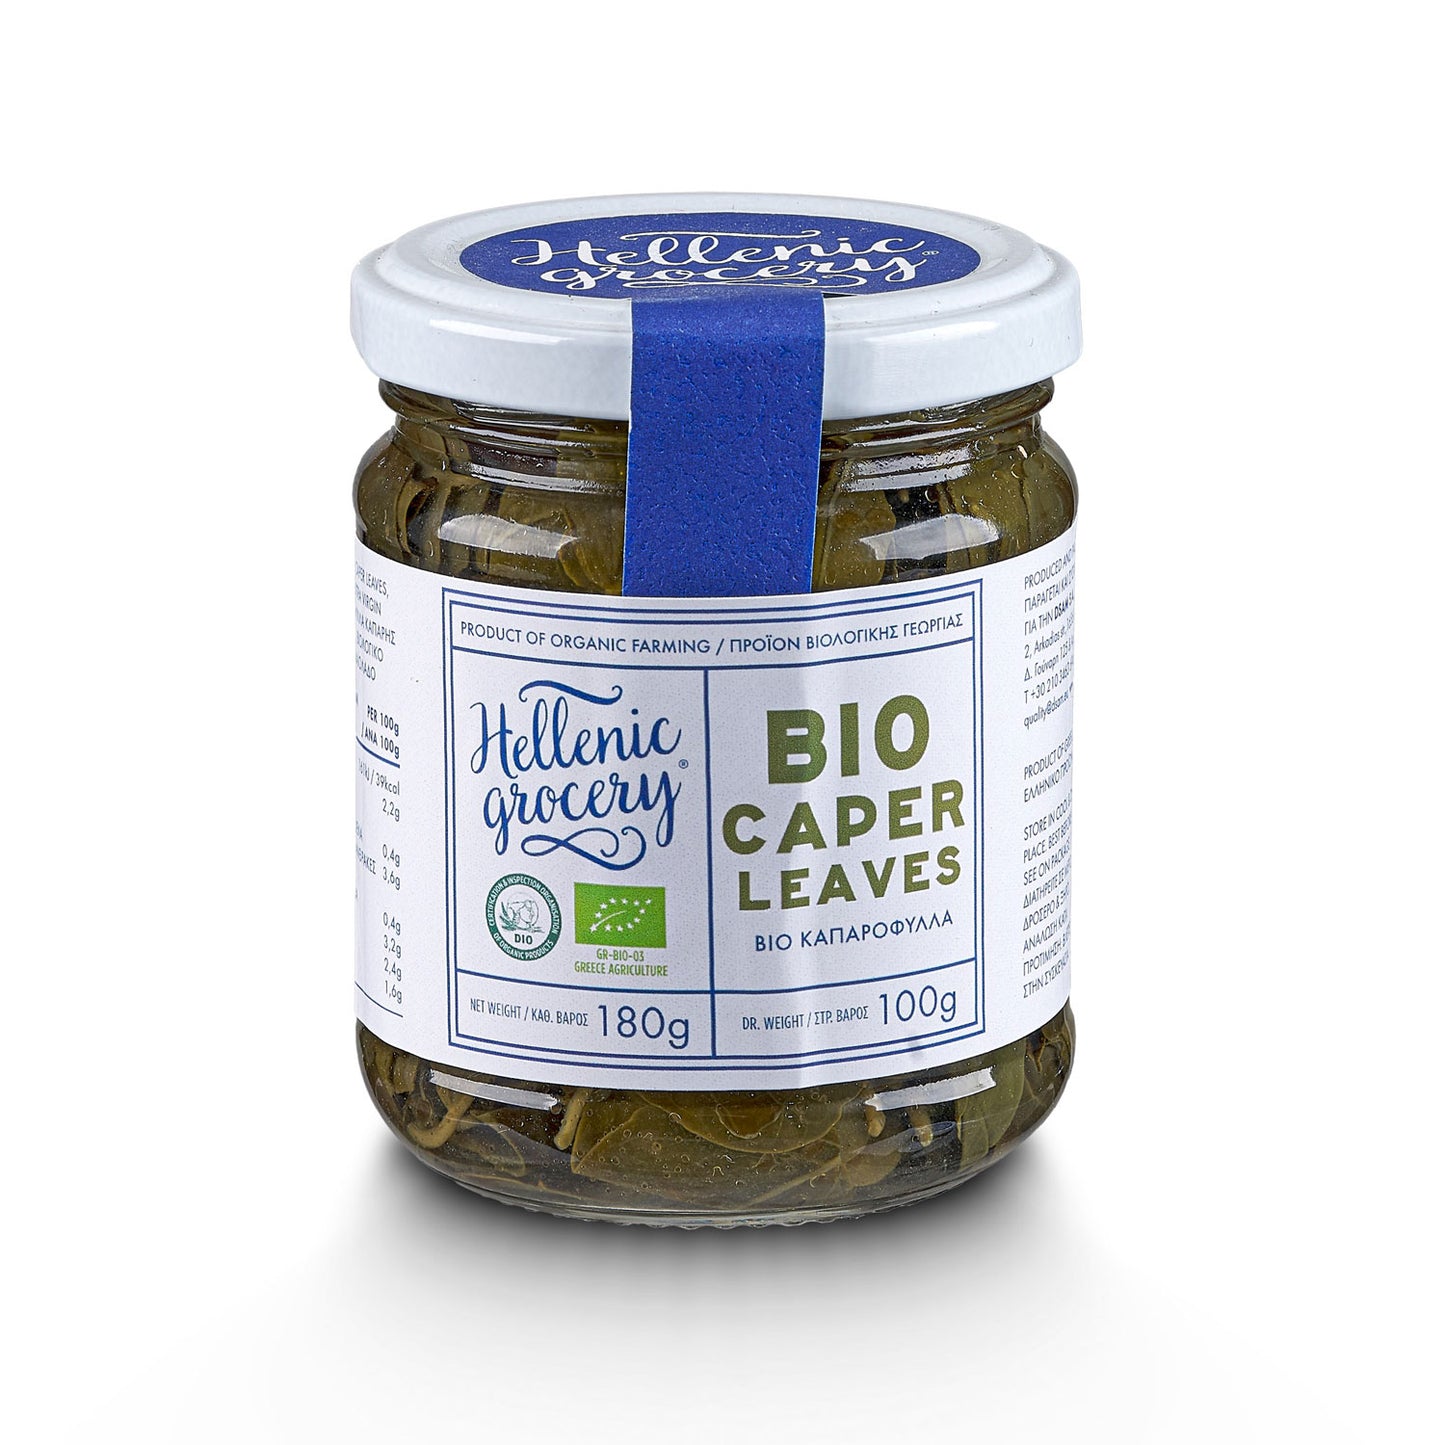 Organic Caper Leaves - 180g - Hellenic Grocery